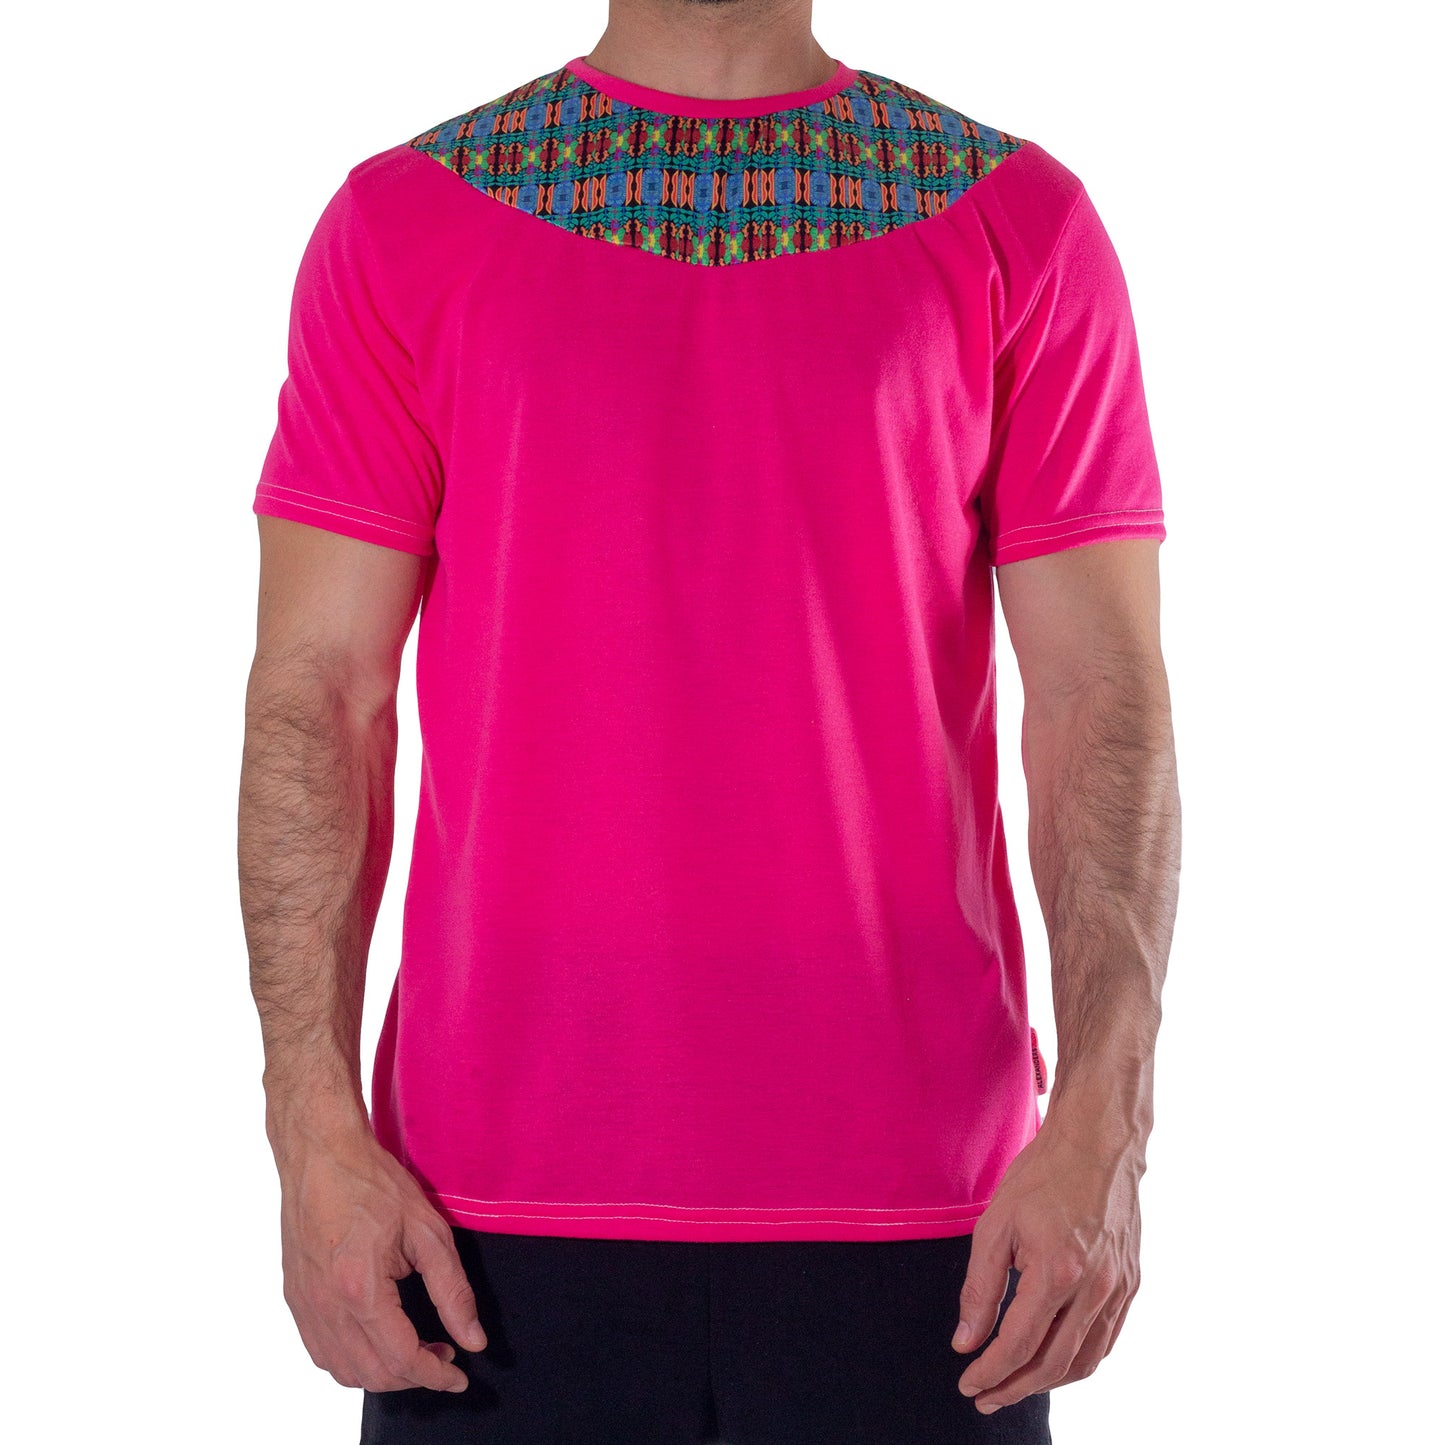 PA0001 Fuchsia Azteca T-Shirt with Celestun print bib skinit